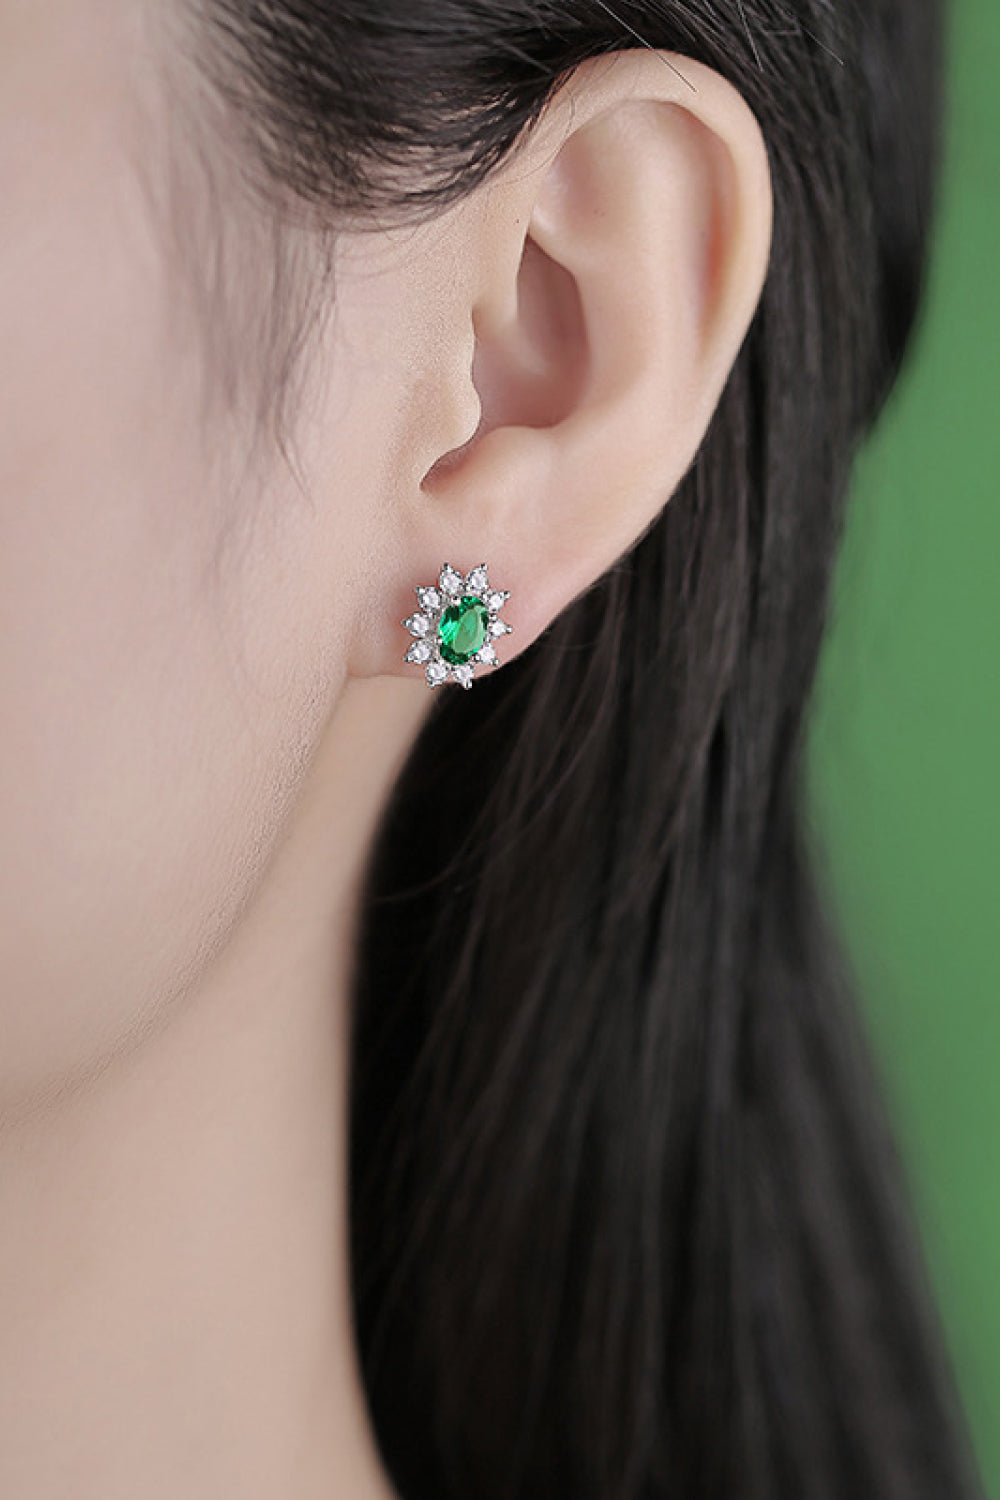 1 Carat Lab-Grown Emerald Stud Earrings